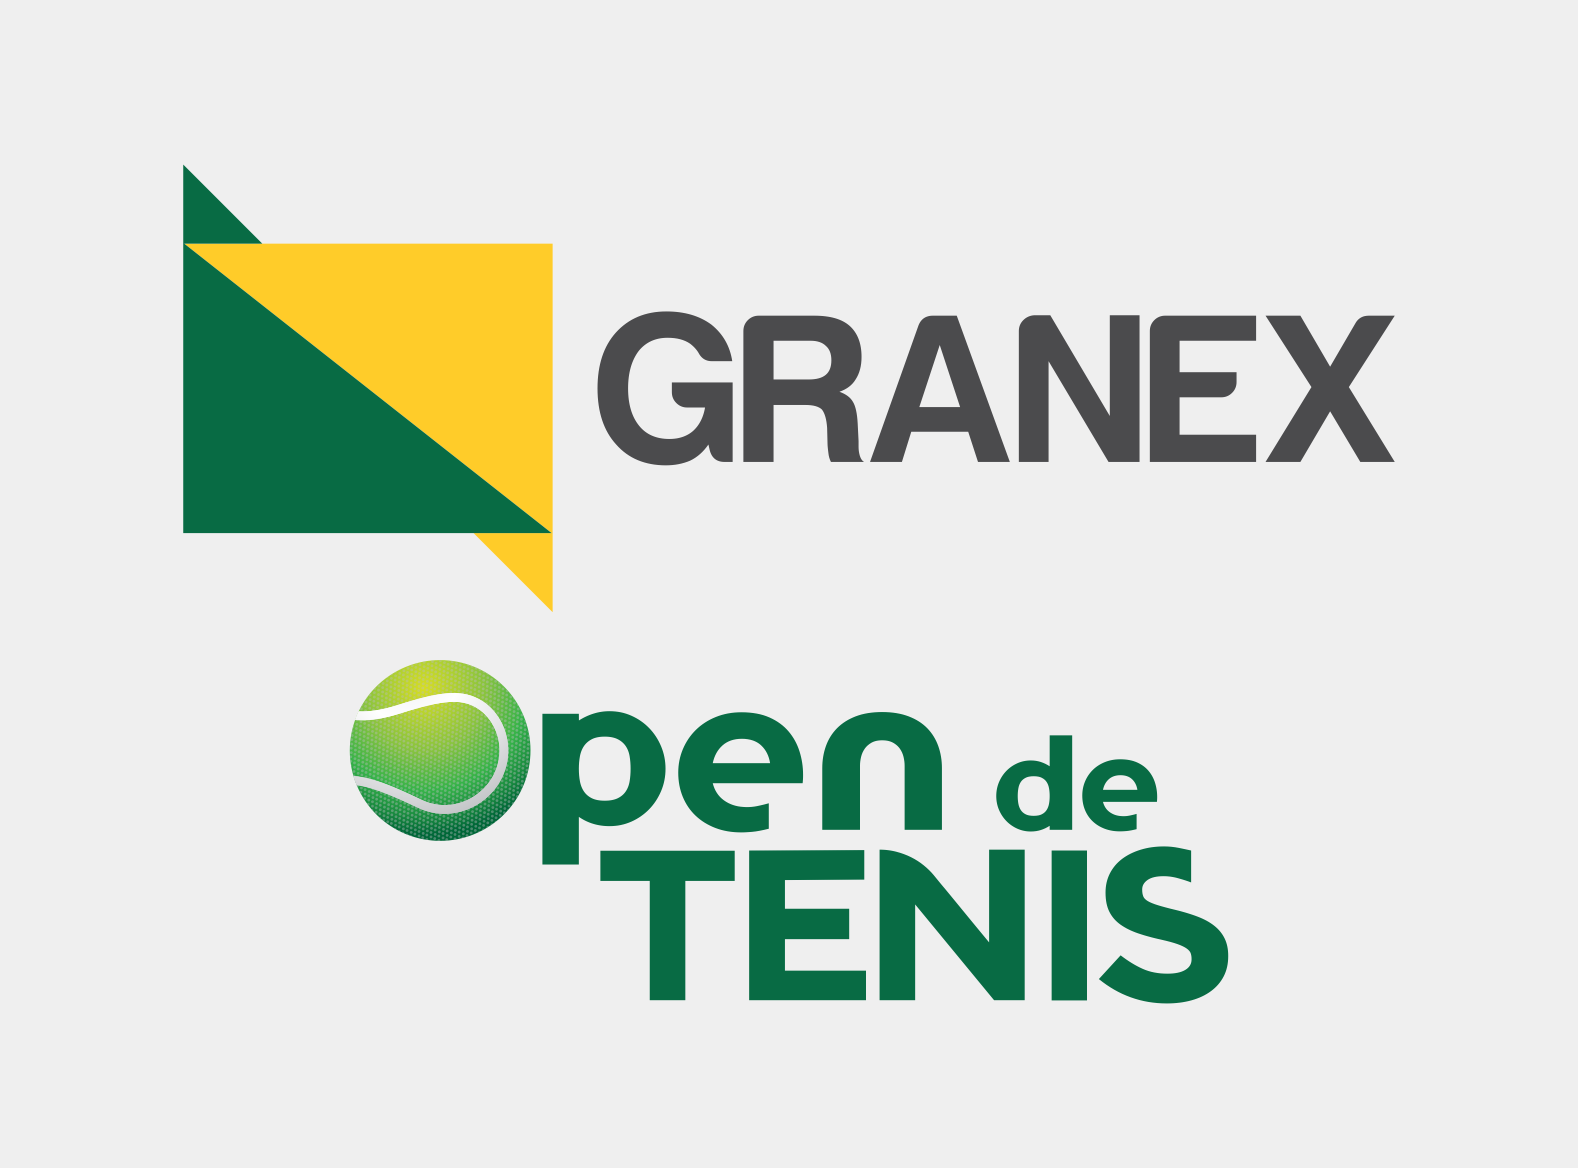 Dupla Falta - Granex Open